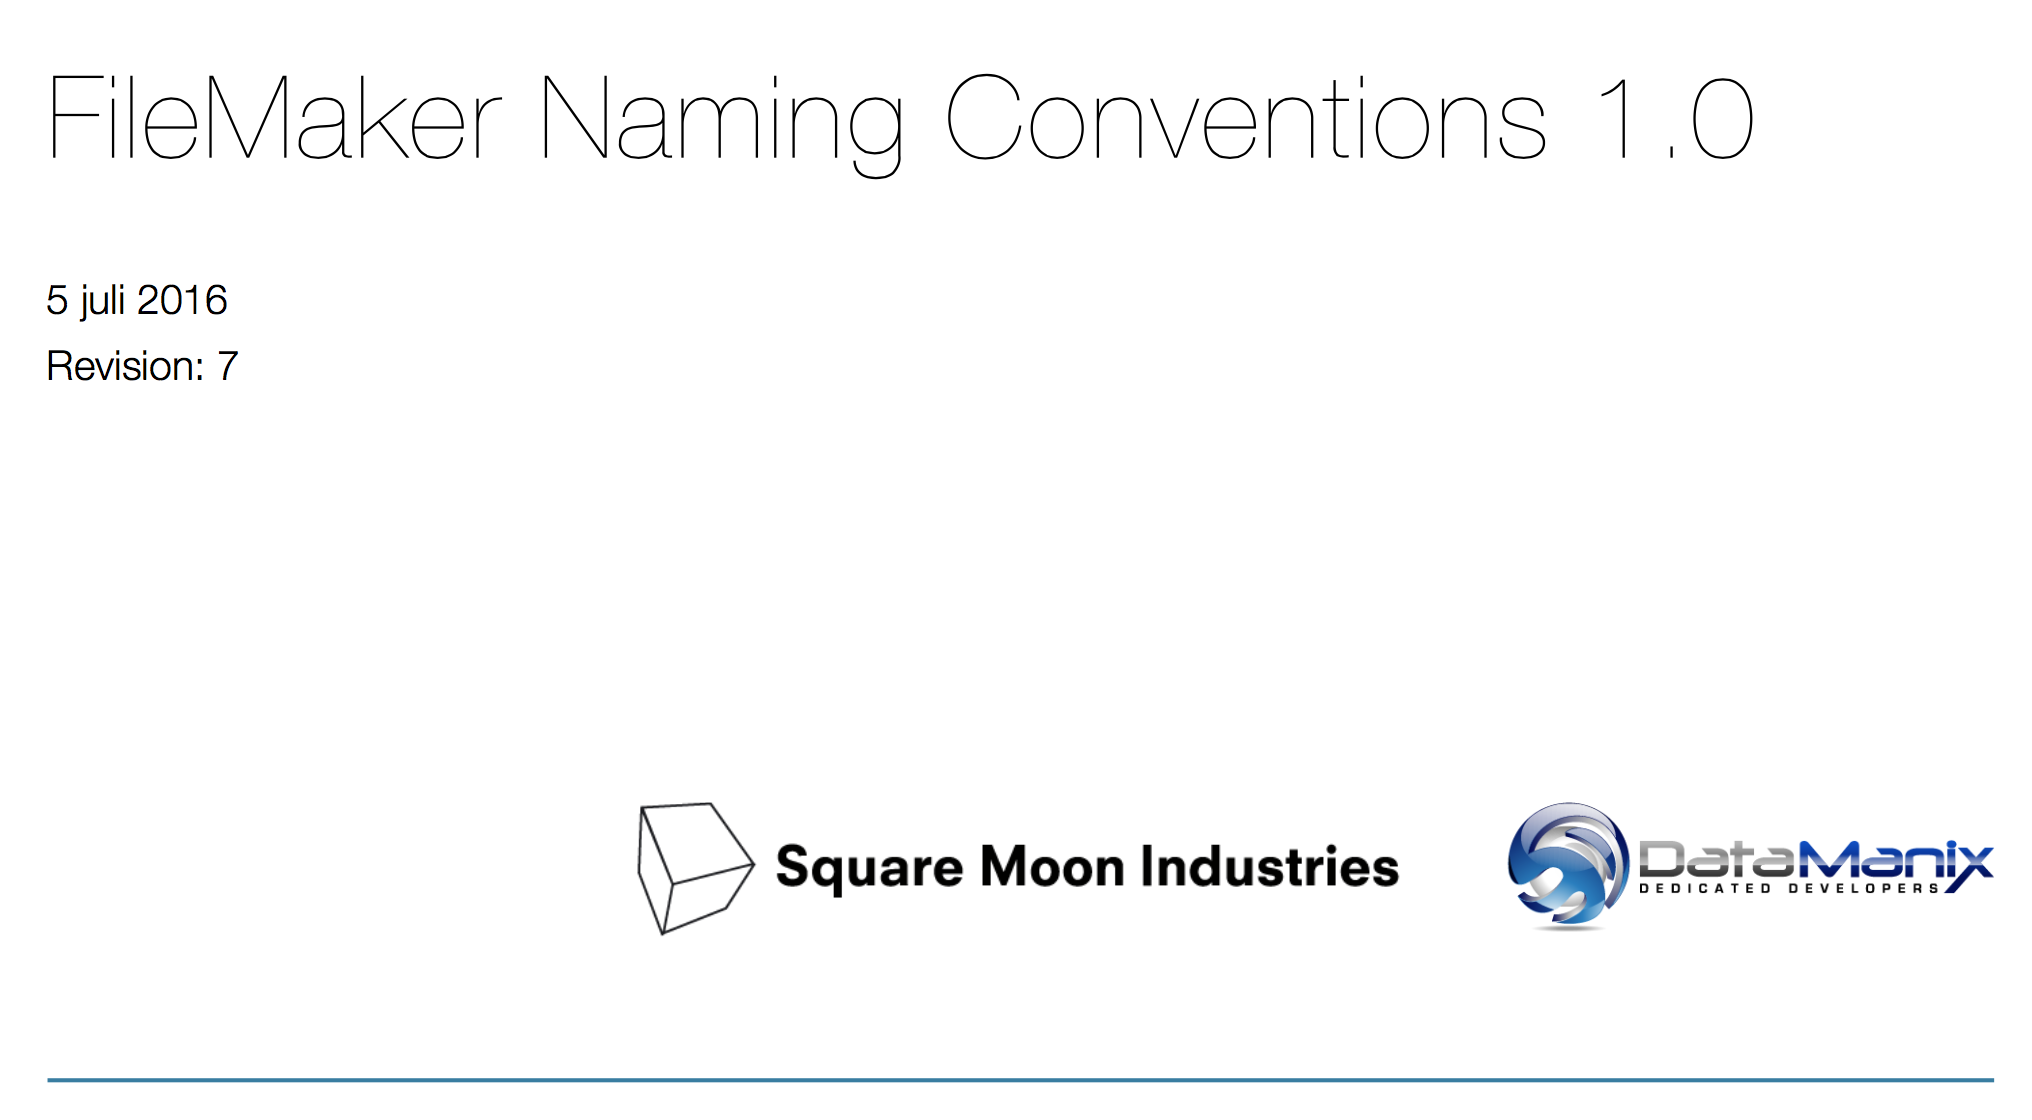 DataManix & SquareMoon naming conventions